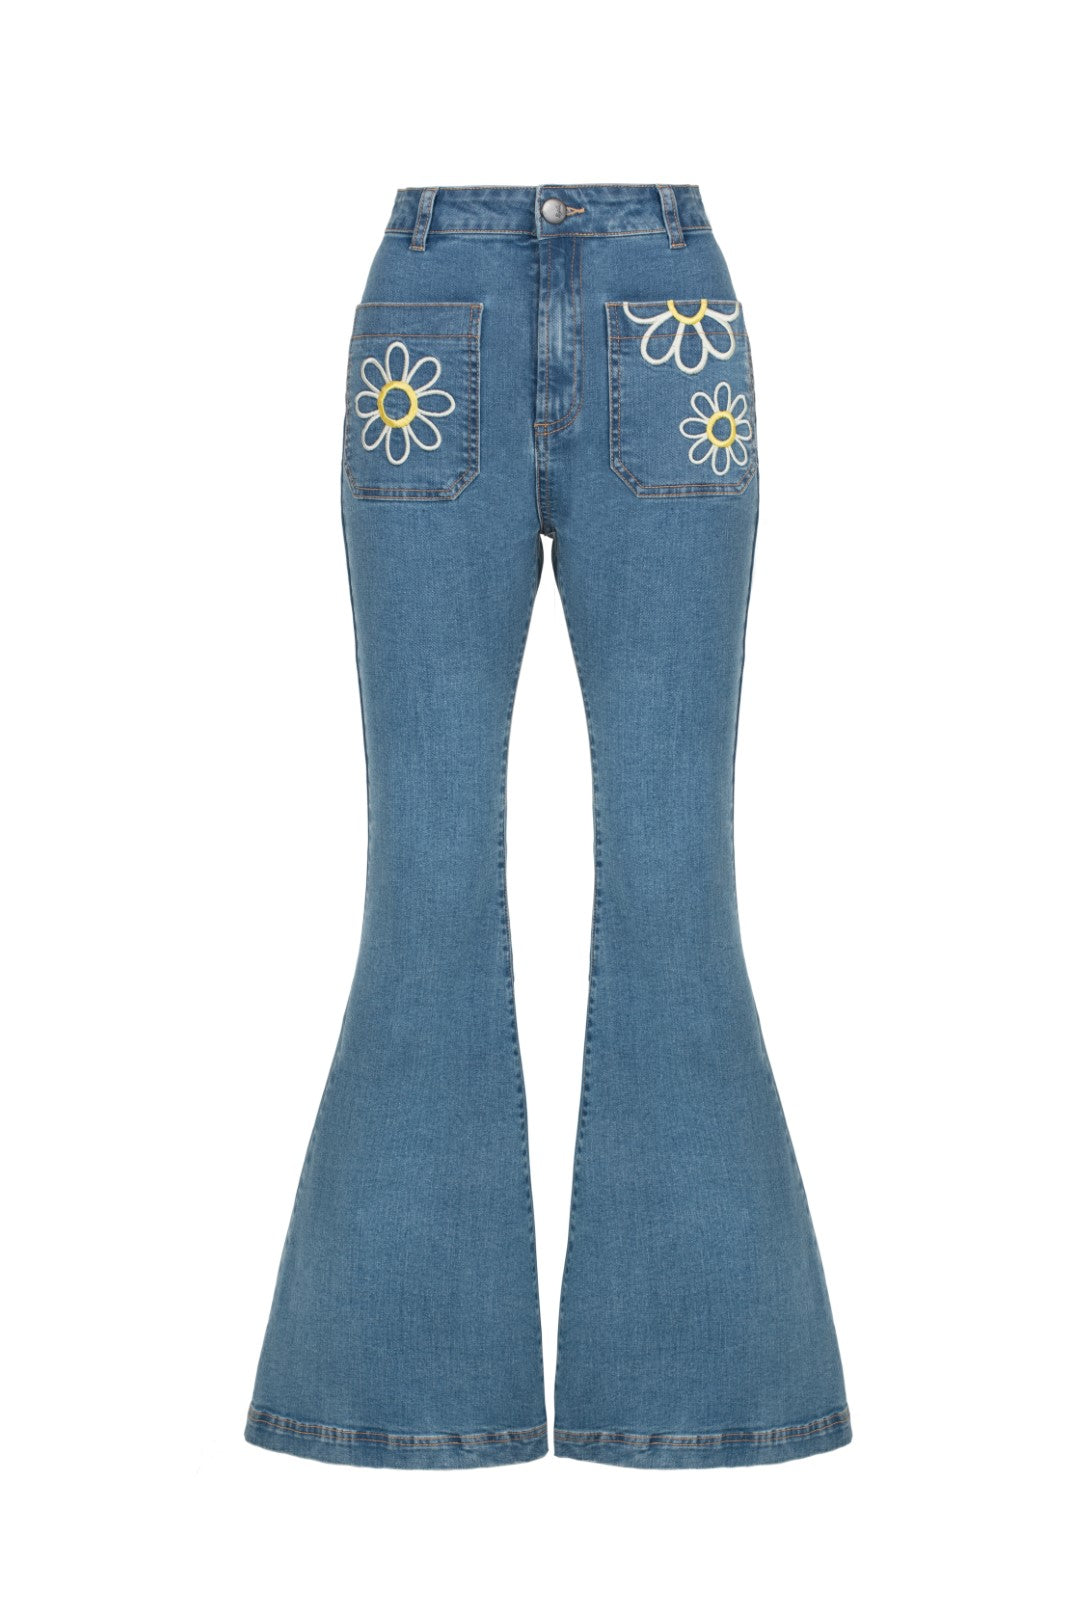 Flower Power Jeans